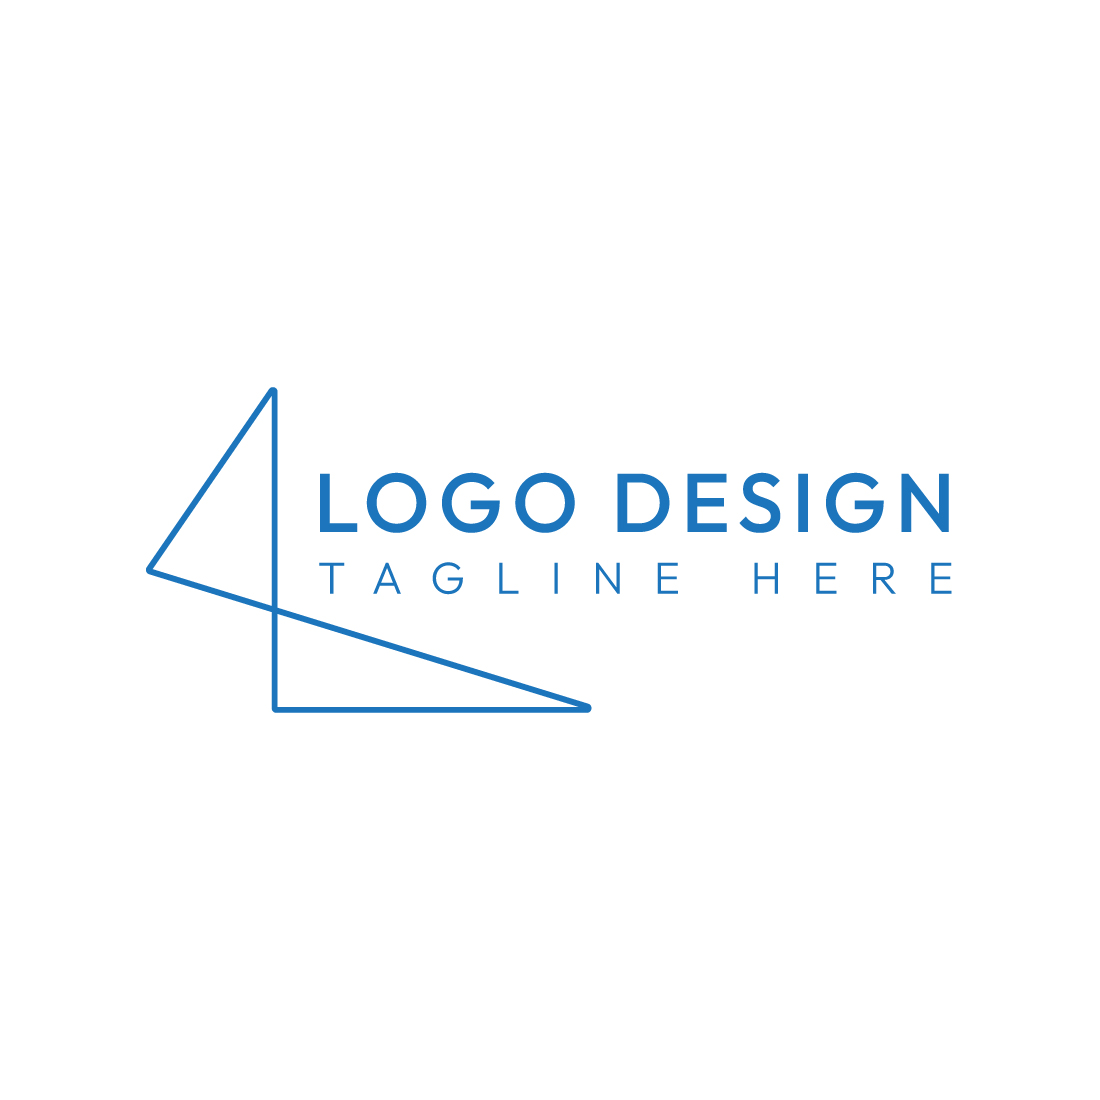 Ultimate Minimalist Logo Design Bundle | Master Collection cover image.